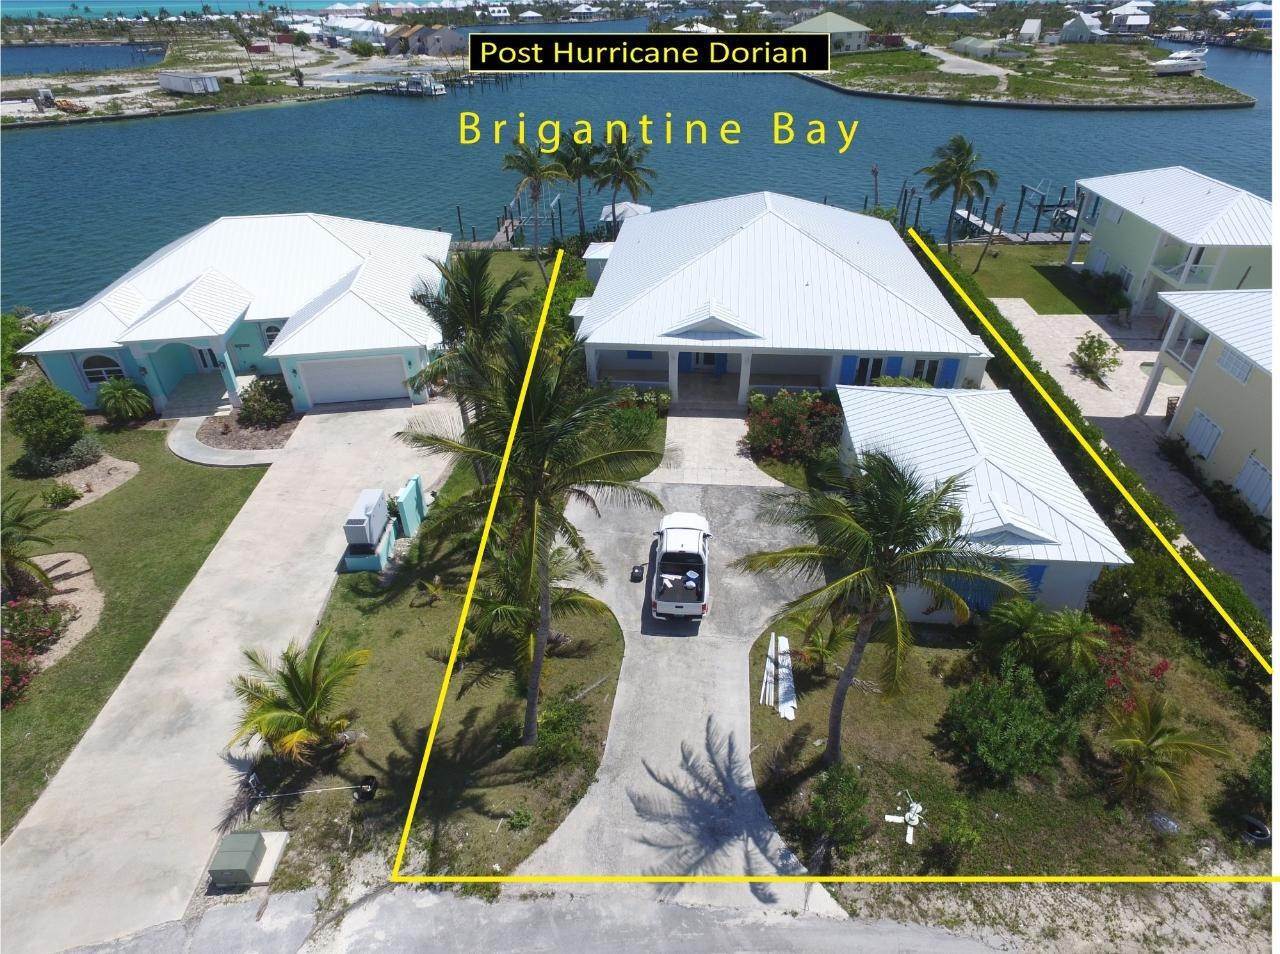 Property for Sale at Treasure Cay, Abaco Bahamas